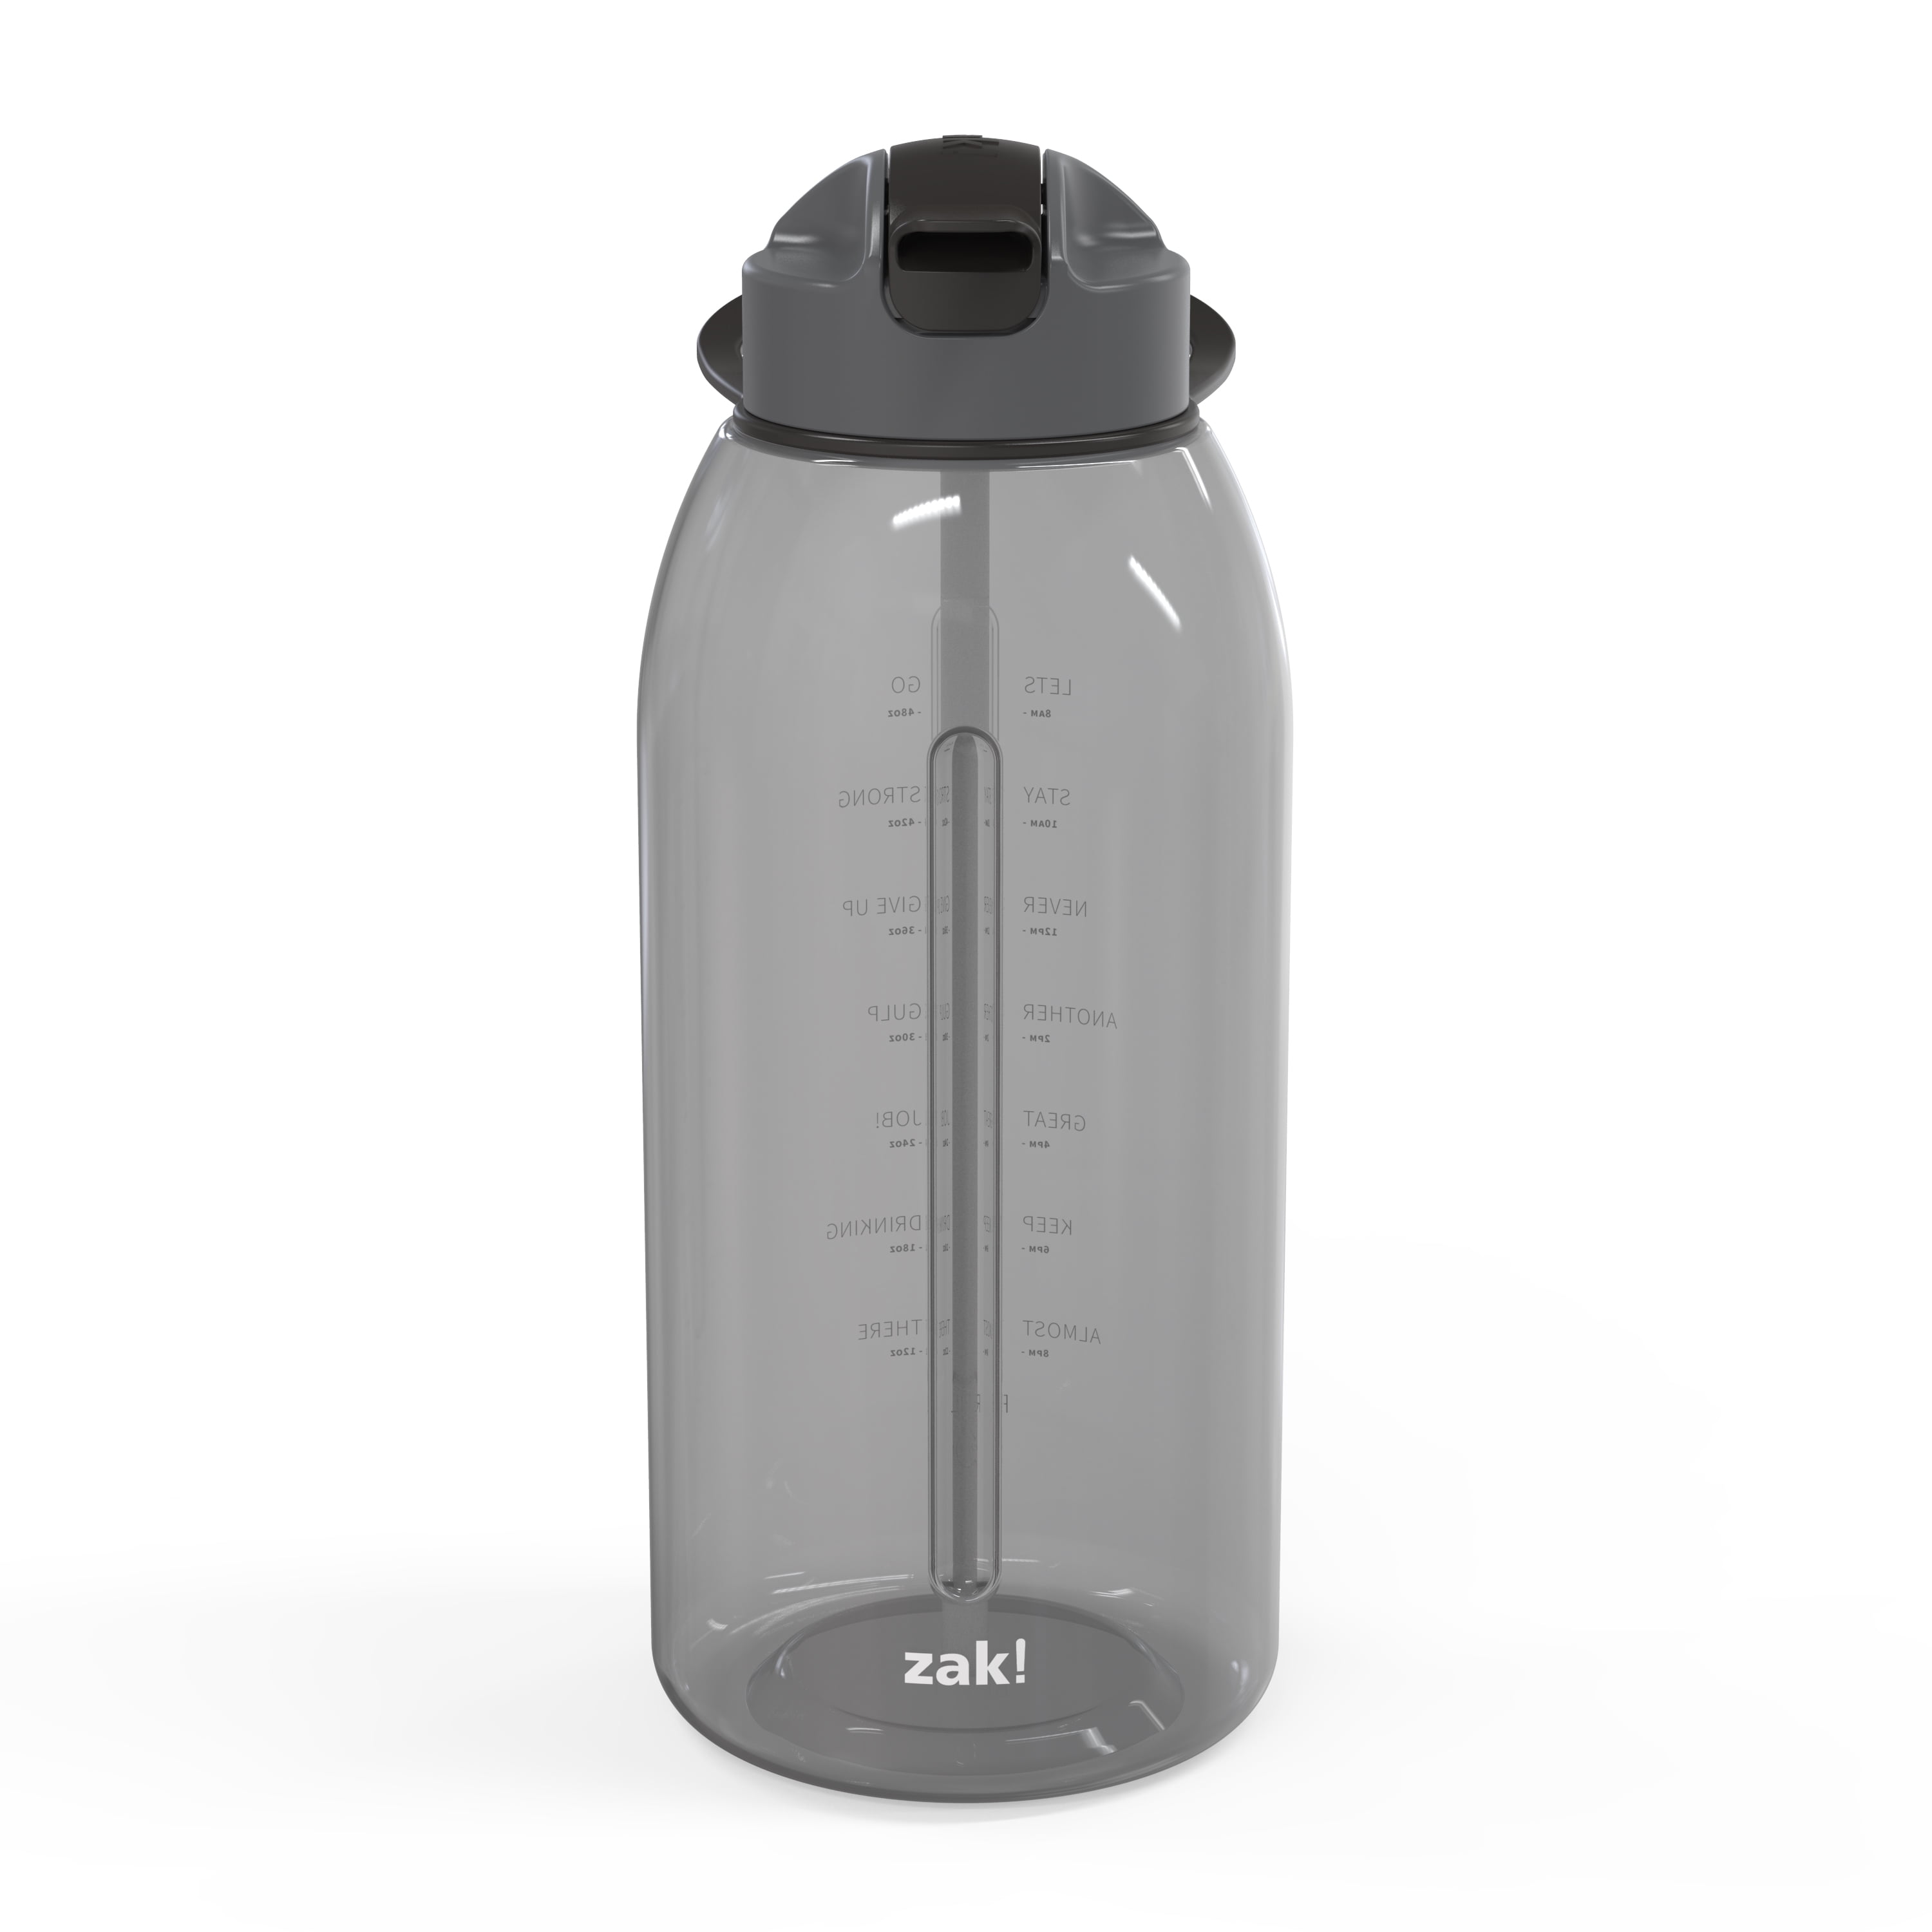  Yeti Rambler 64 oz. Bottle Chug Black - With Removable Spout for